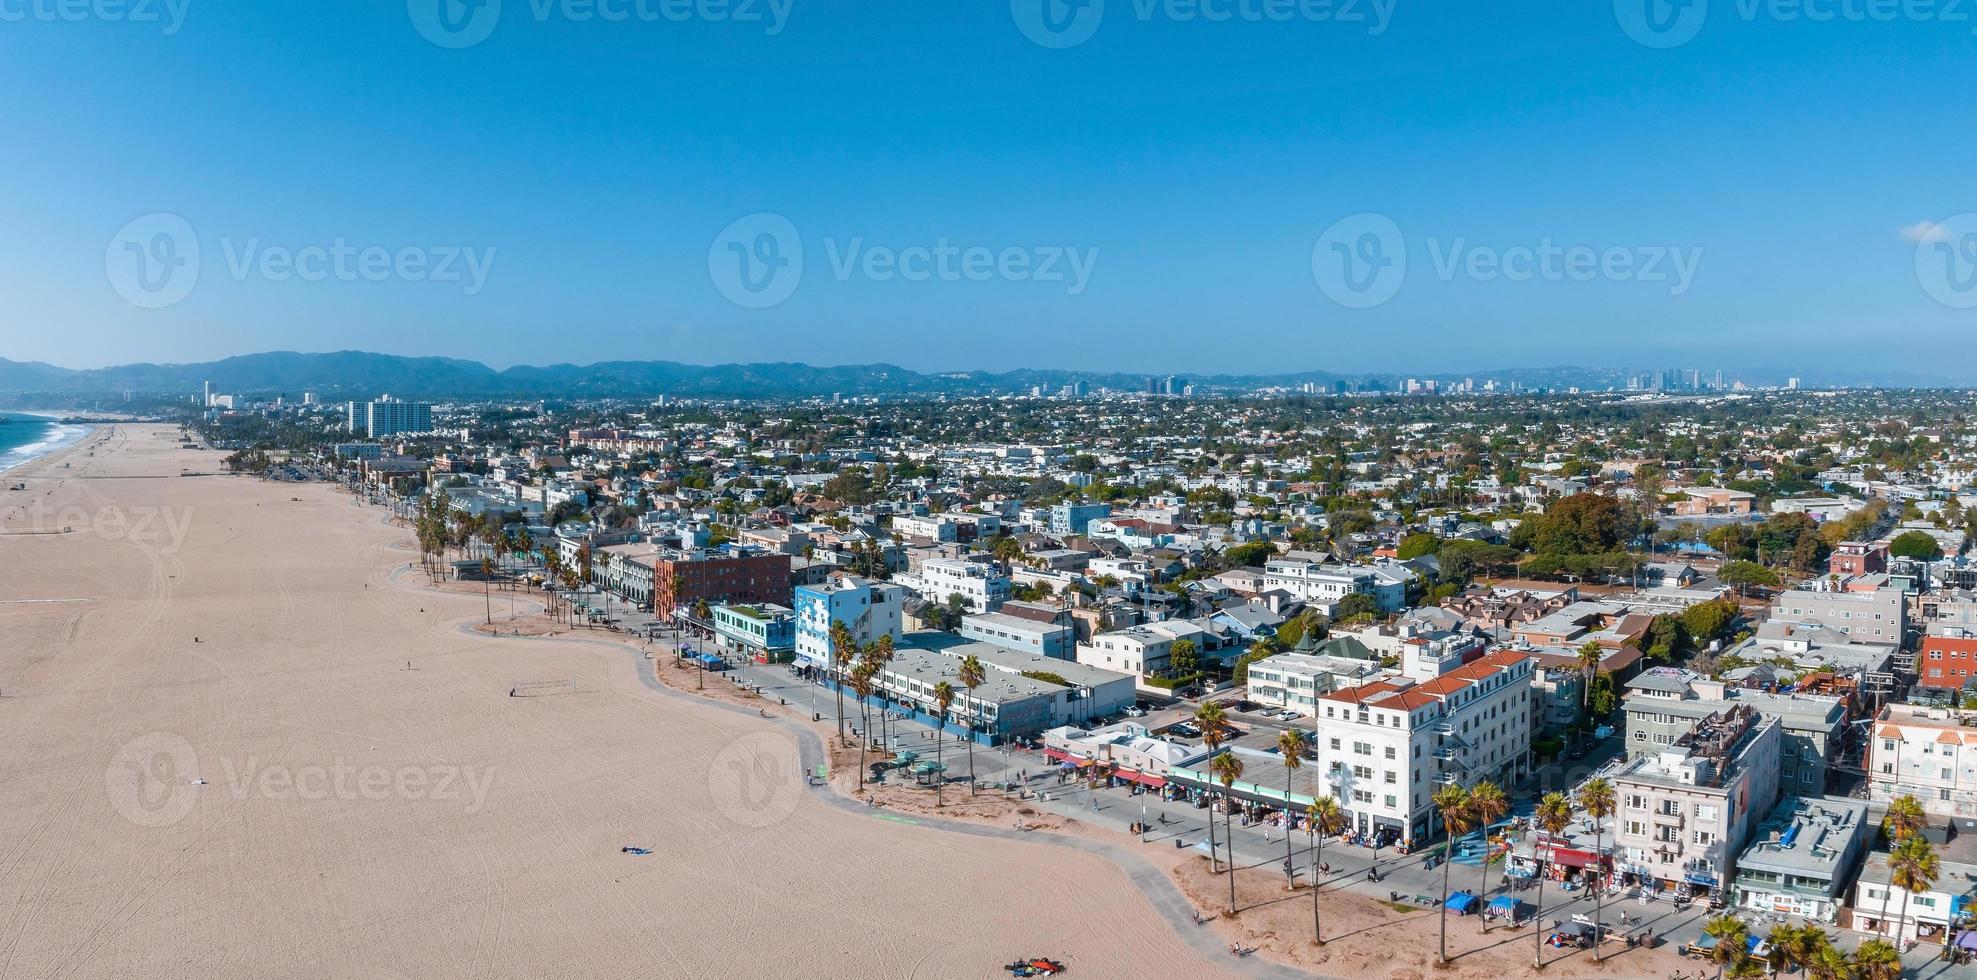 vista aérea de la costa en venice beach, ca foto